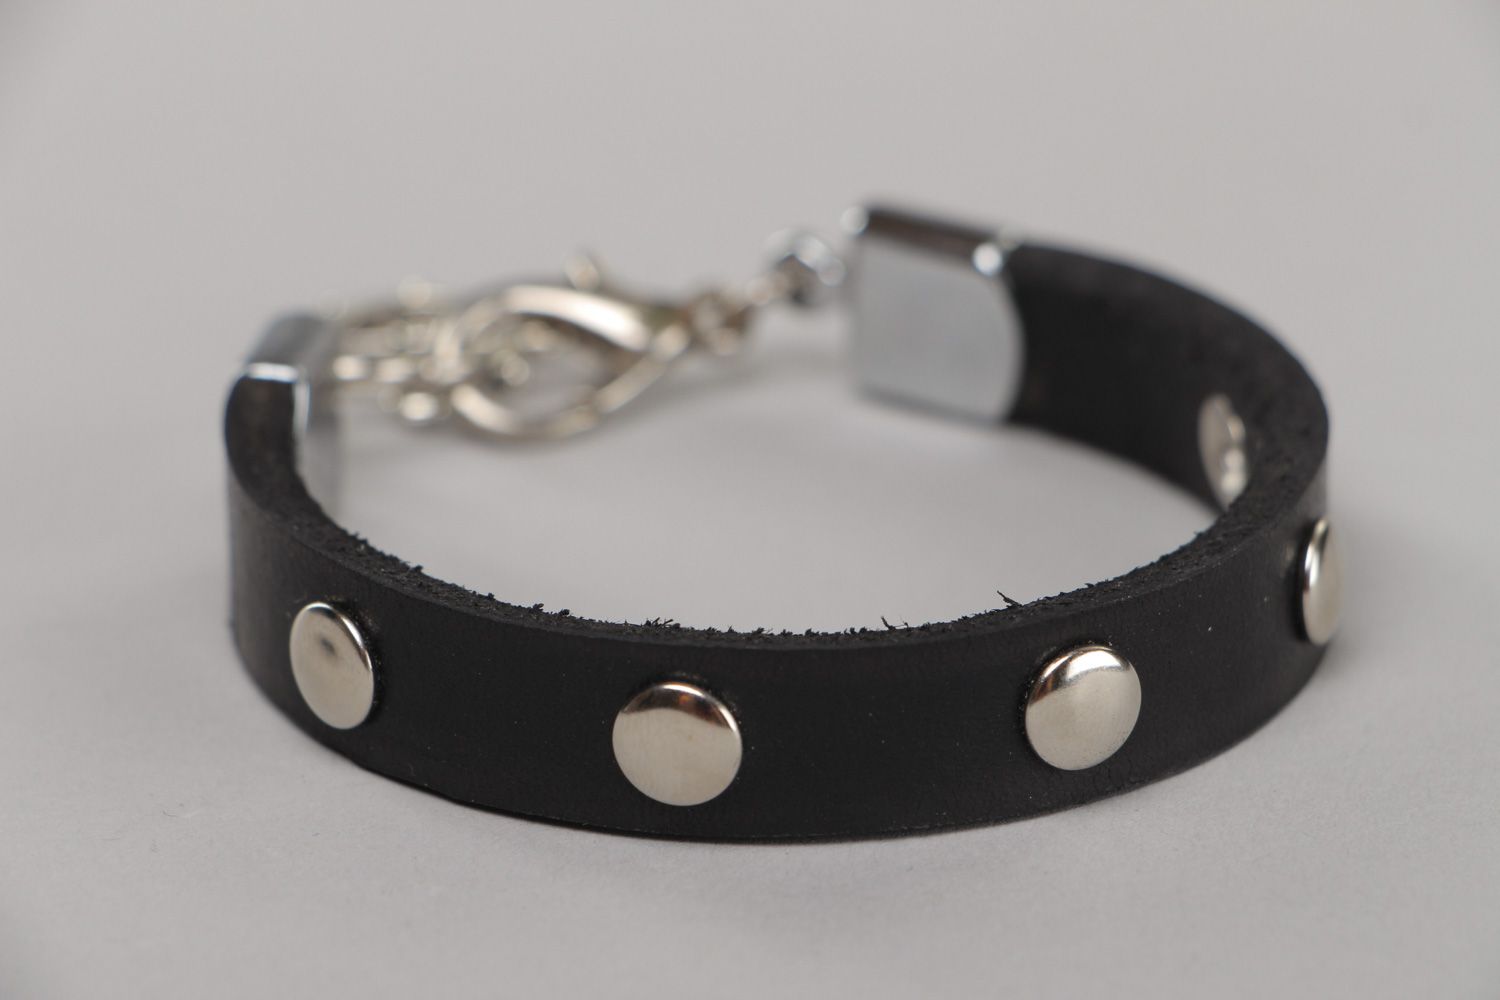 Handmade wrist bracelet woven of genuine leather with metal charm steering wheel photo 3